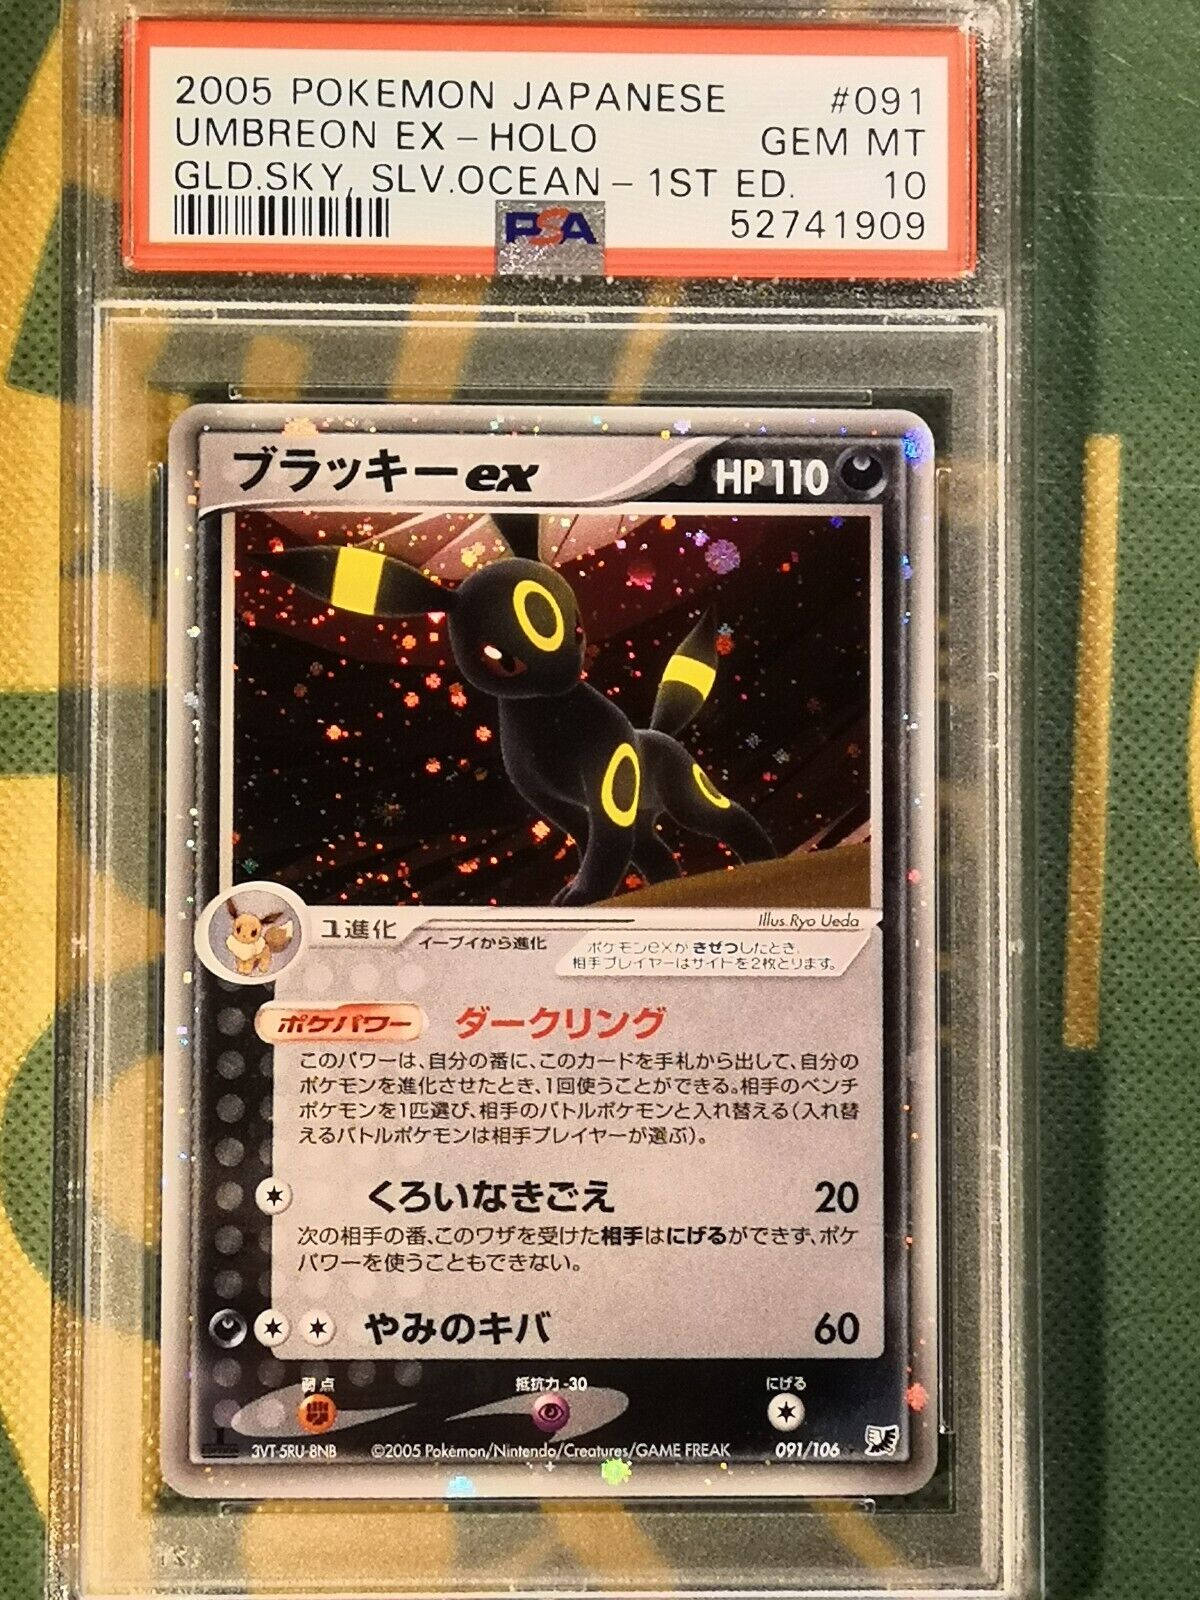 PSA 10 1st edition Umbreon ex holo Golden Sky Unseen Force Japanese Pokemon Card